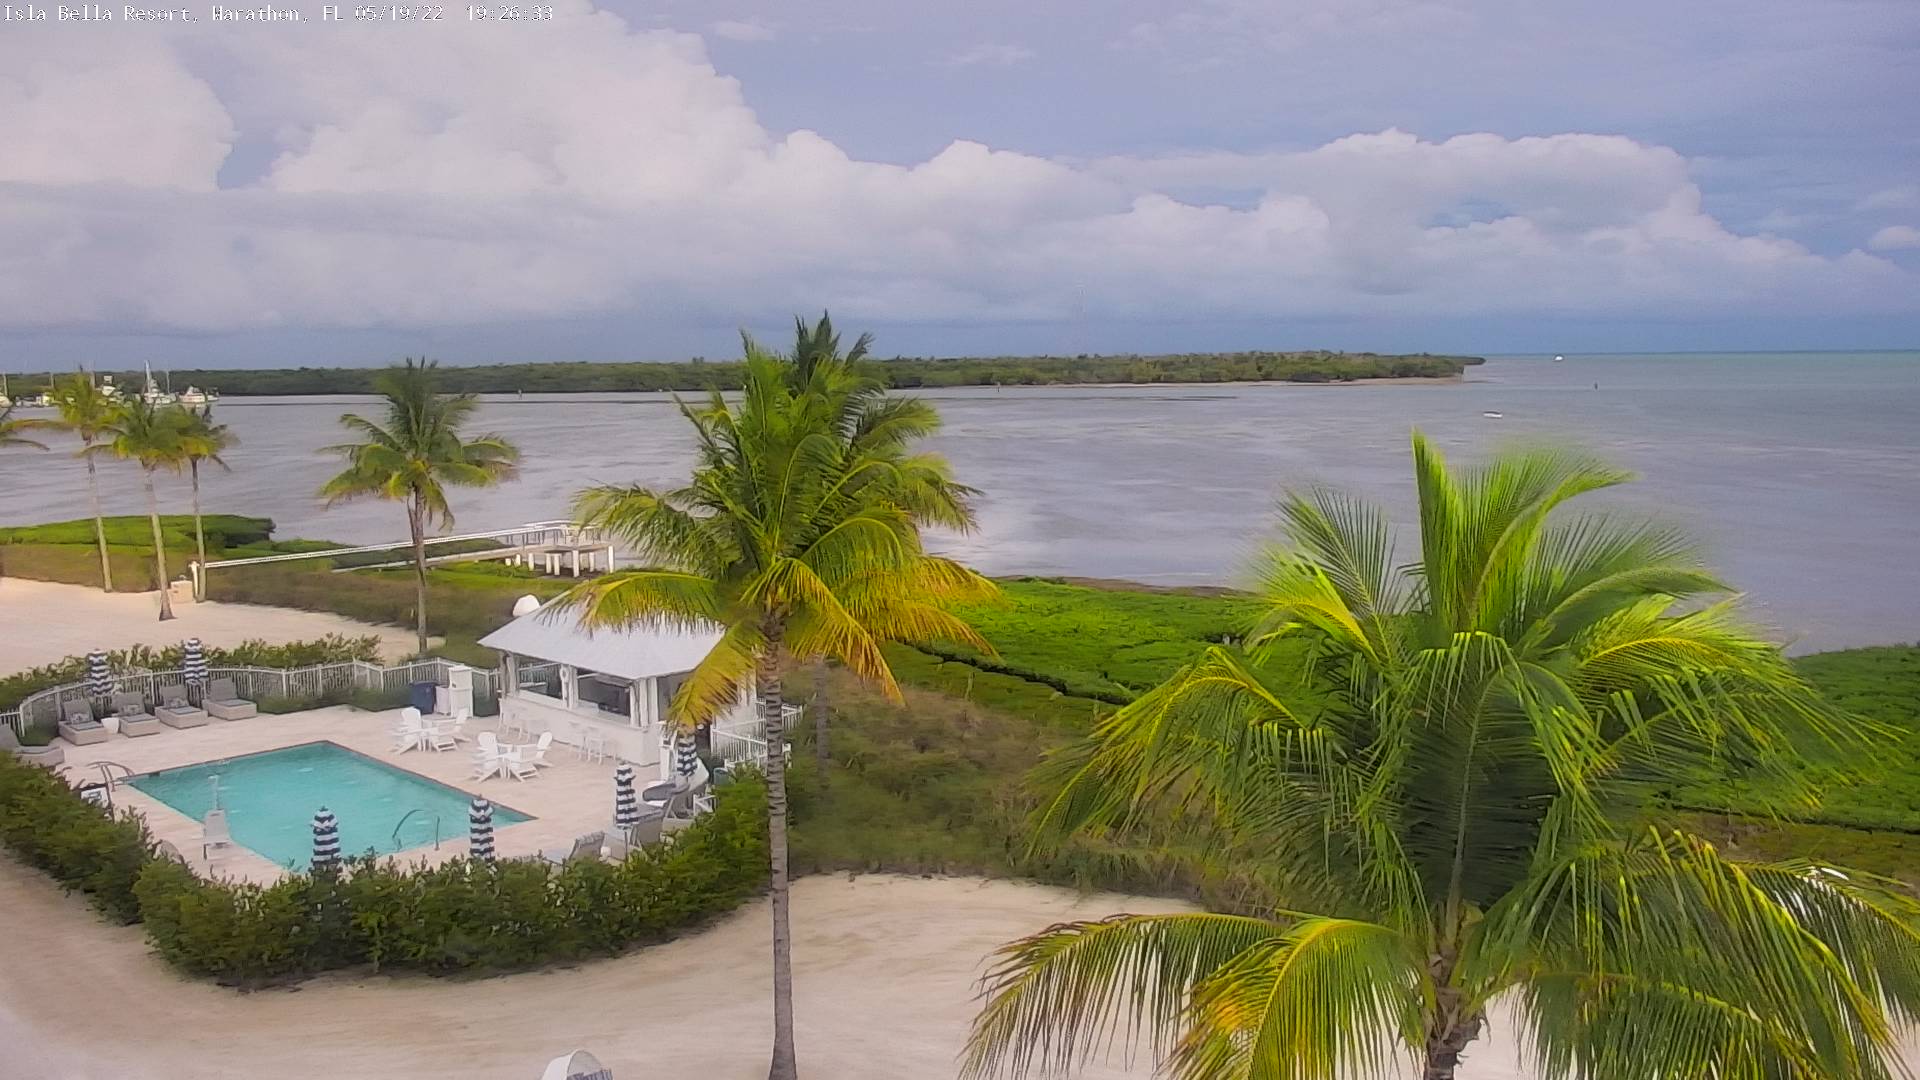 Isla Bella Beach Resort: Resort Cam - Florida Keys (fla-keys.com) - Florida